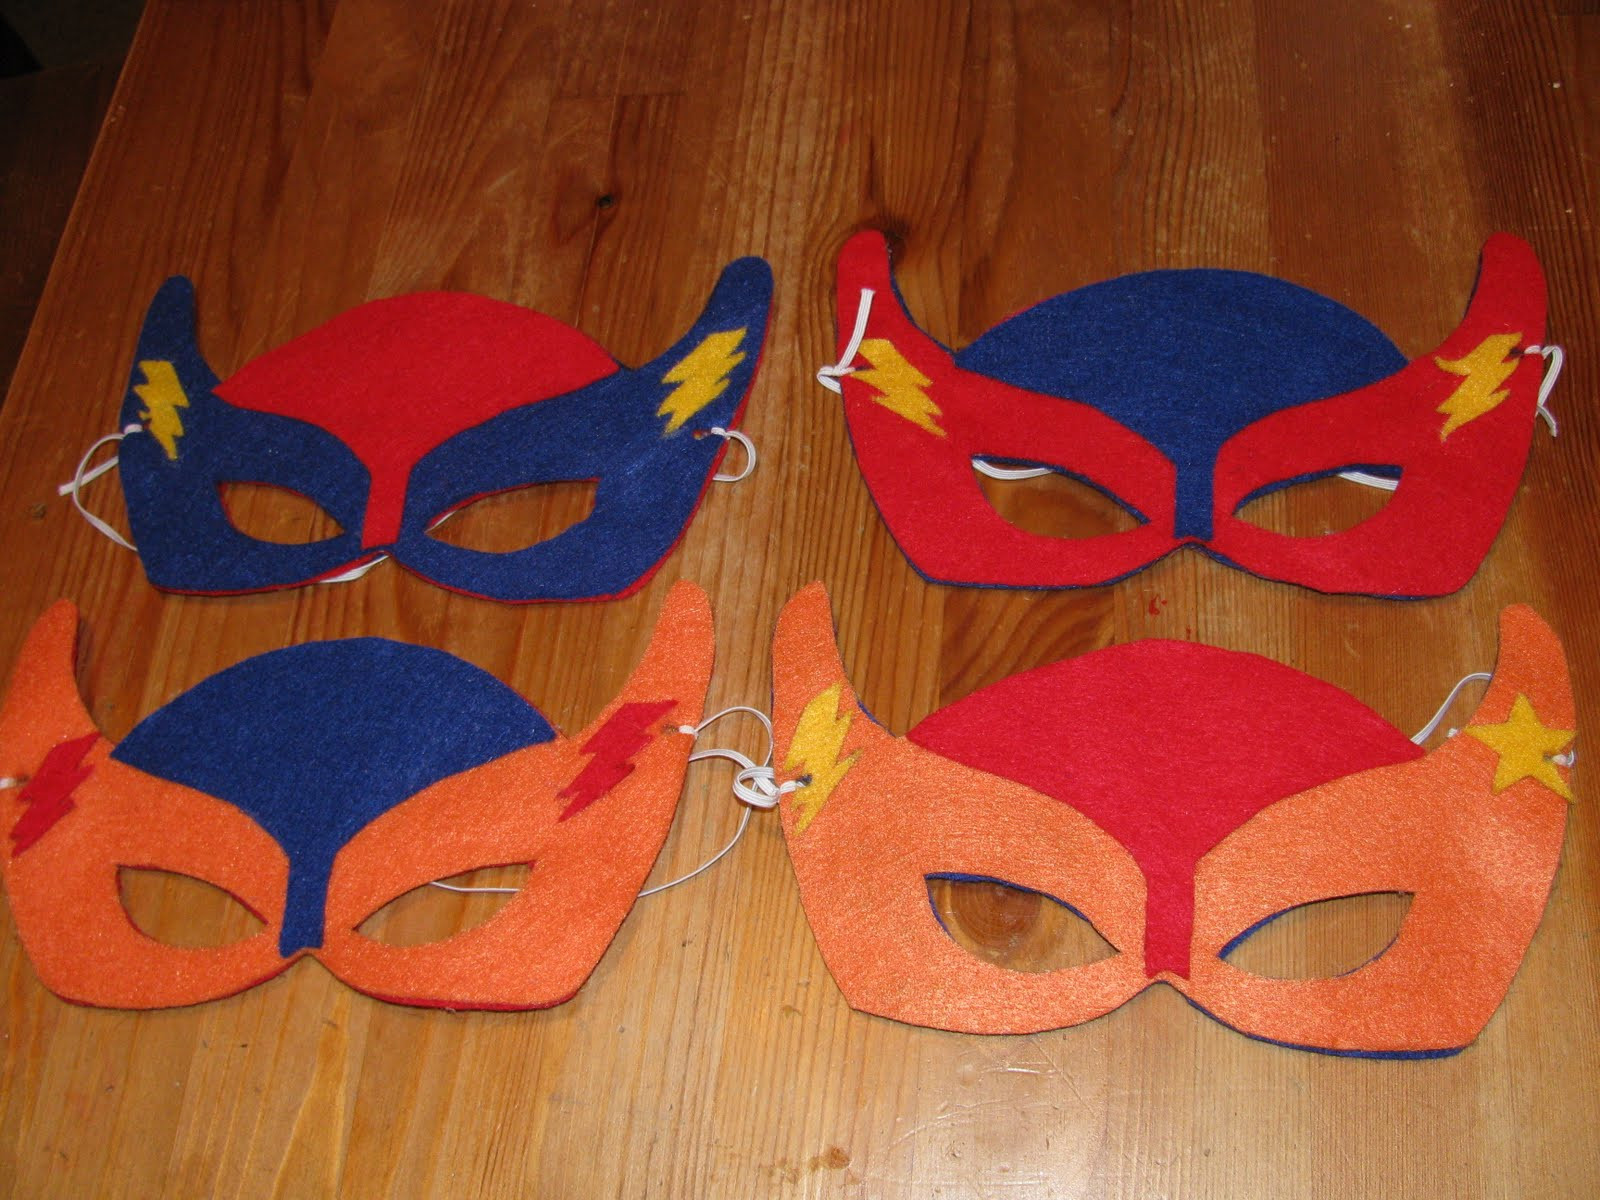 Best ideas about DIY Superhero Mask
. Save or Pin My Crafty Playground DIY Superhero masks Now.